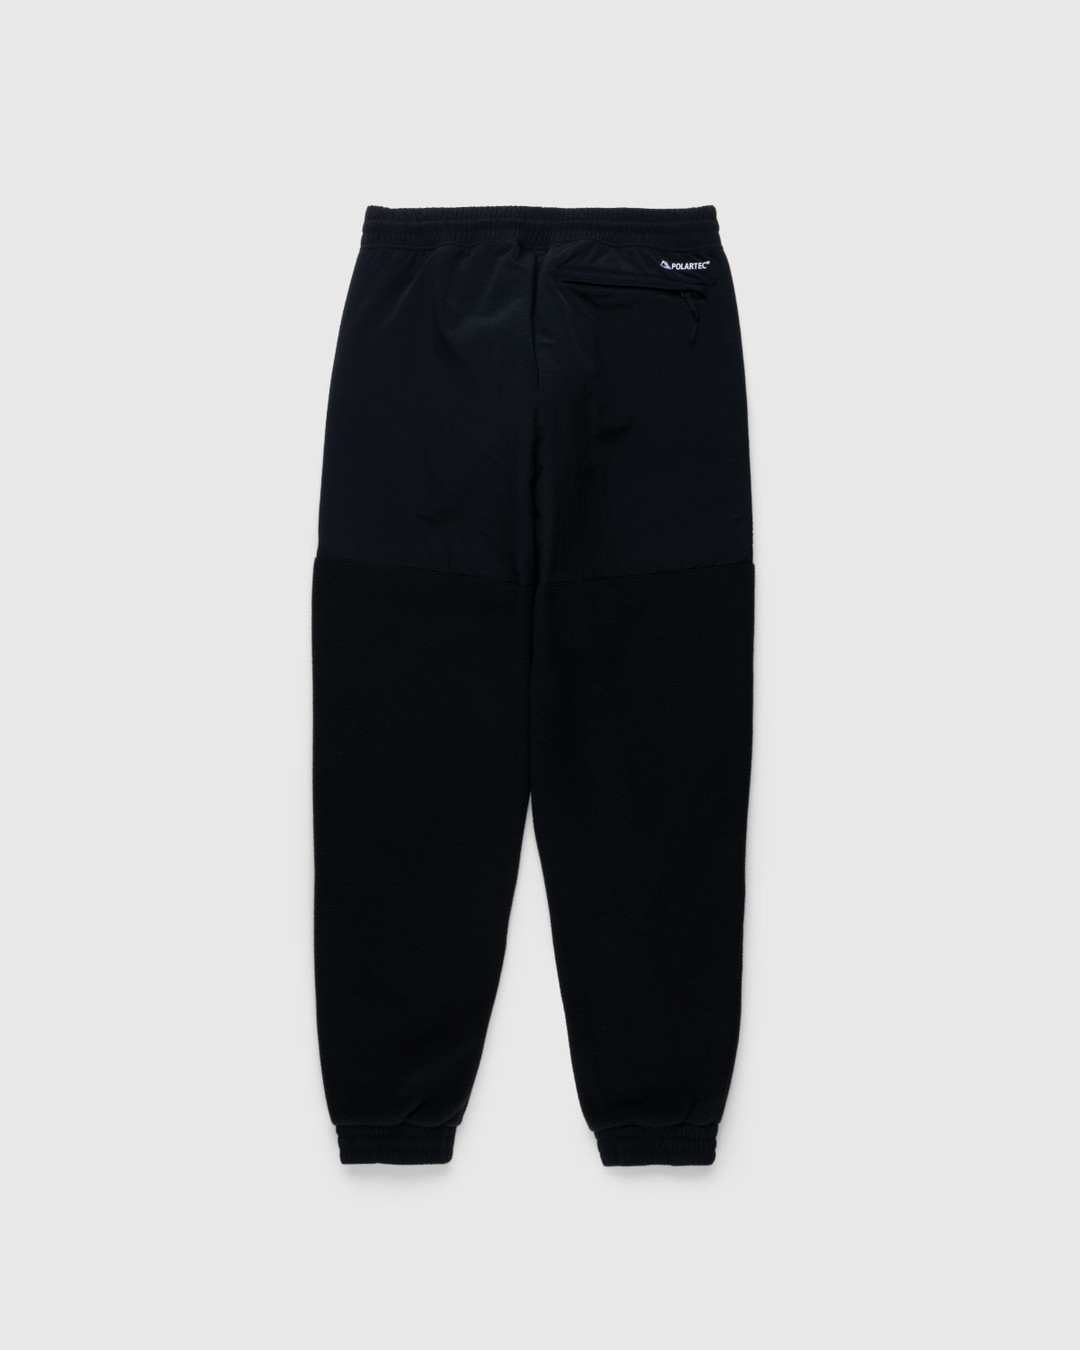 The North Face – Denali Pant Black - Active Pants - Black - Image 2